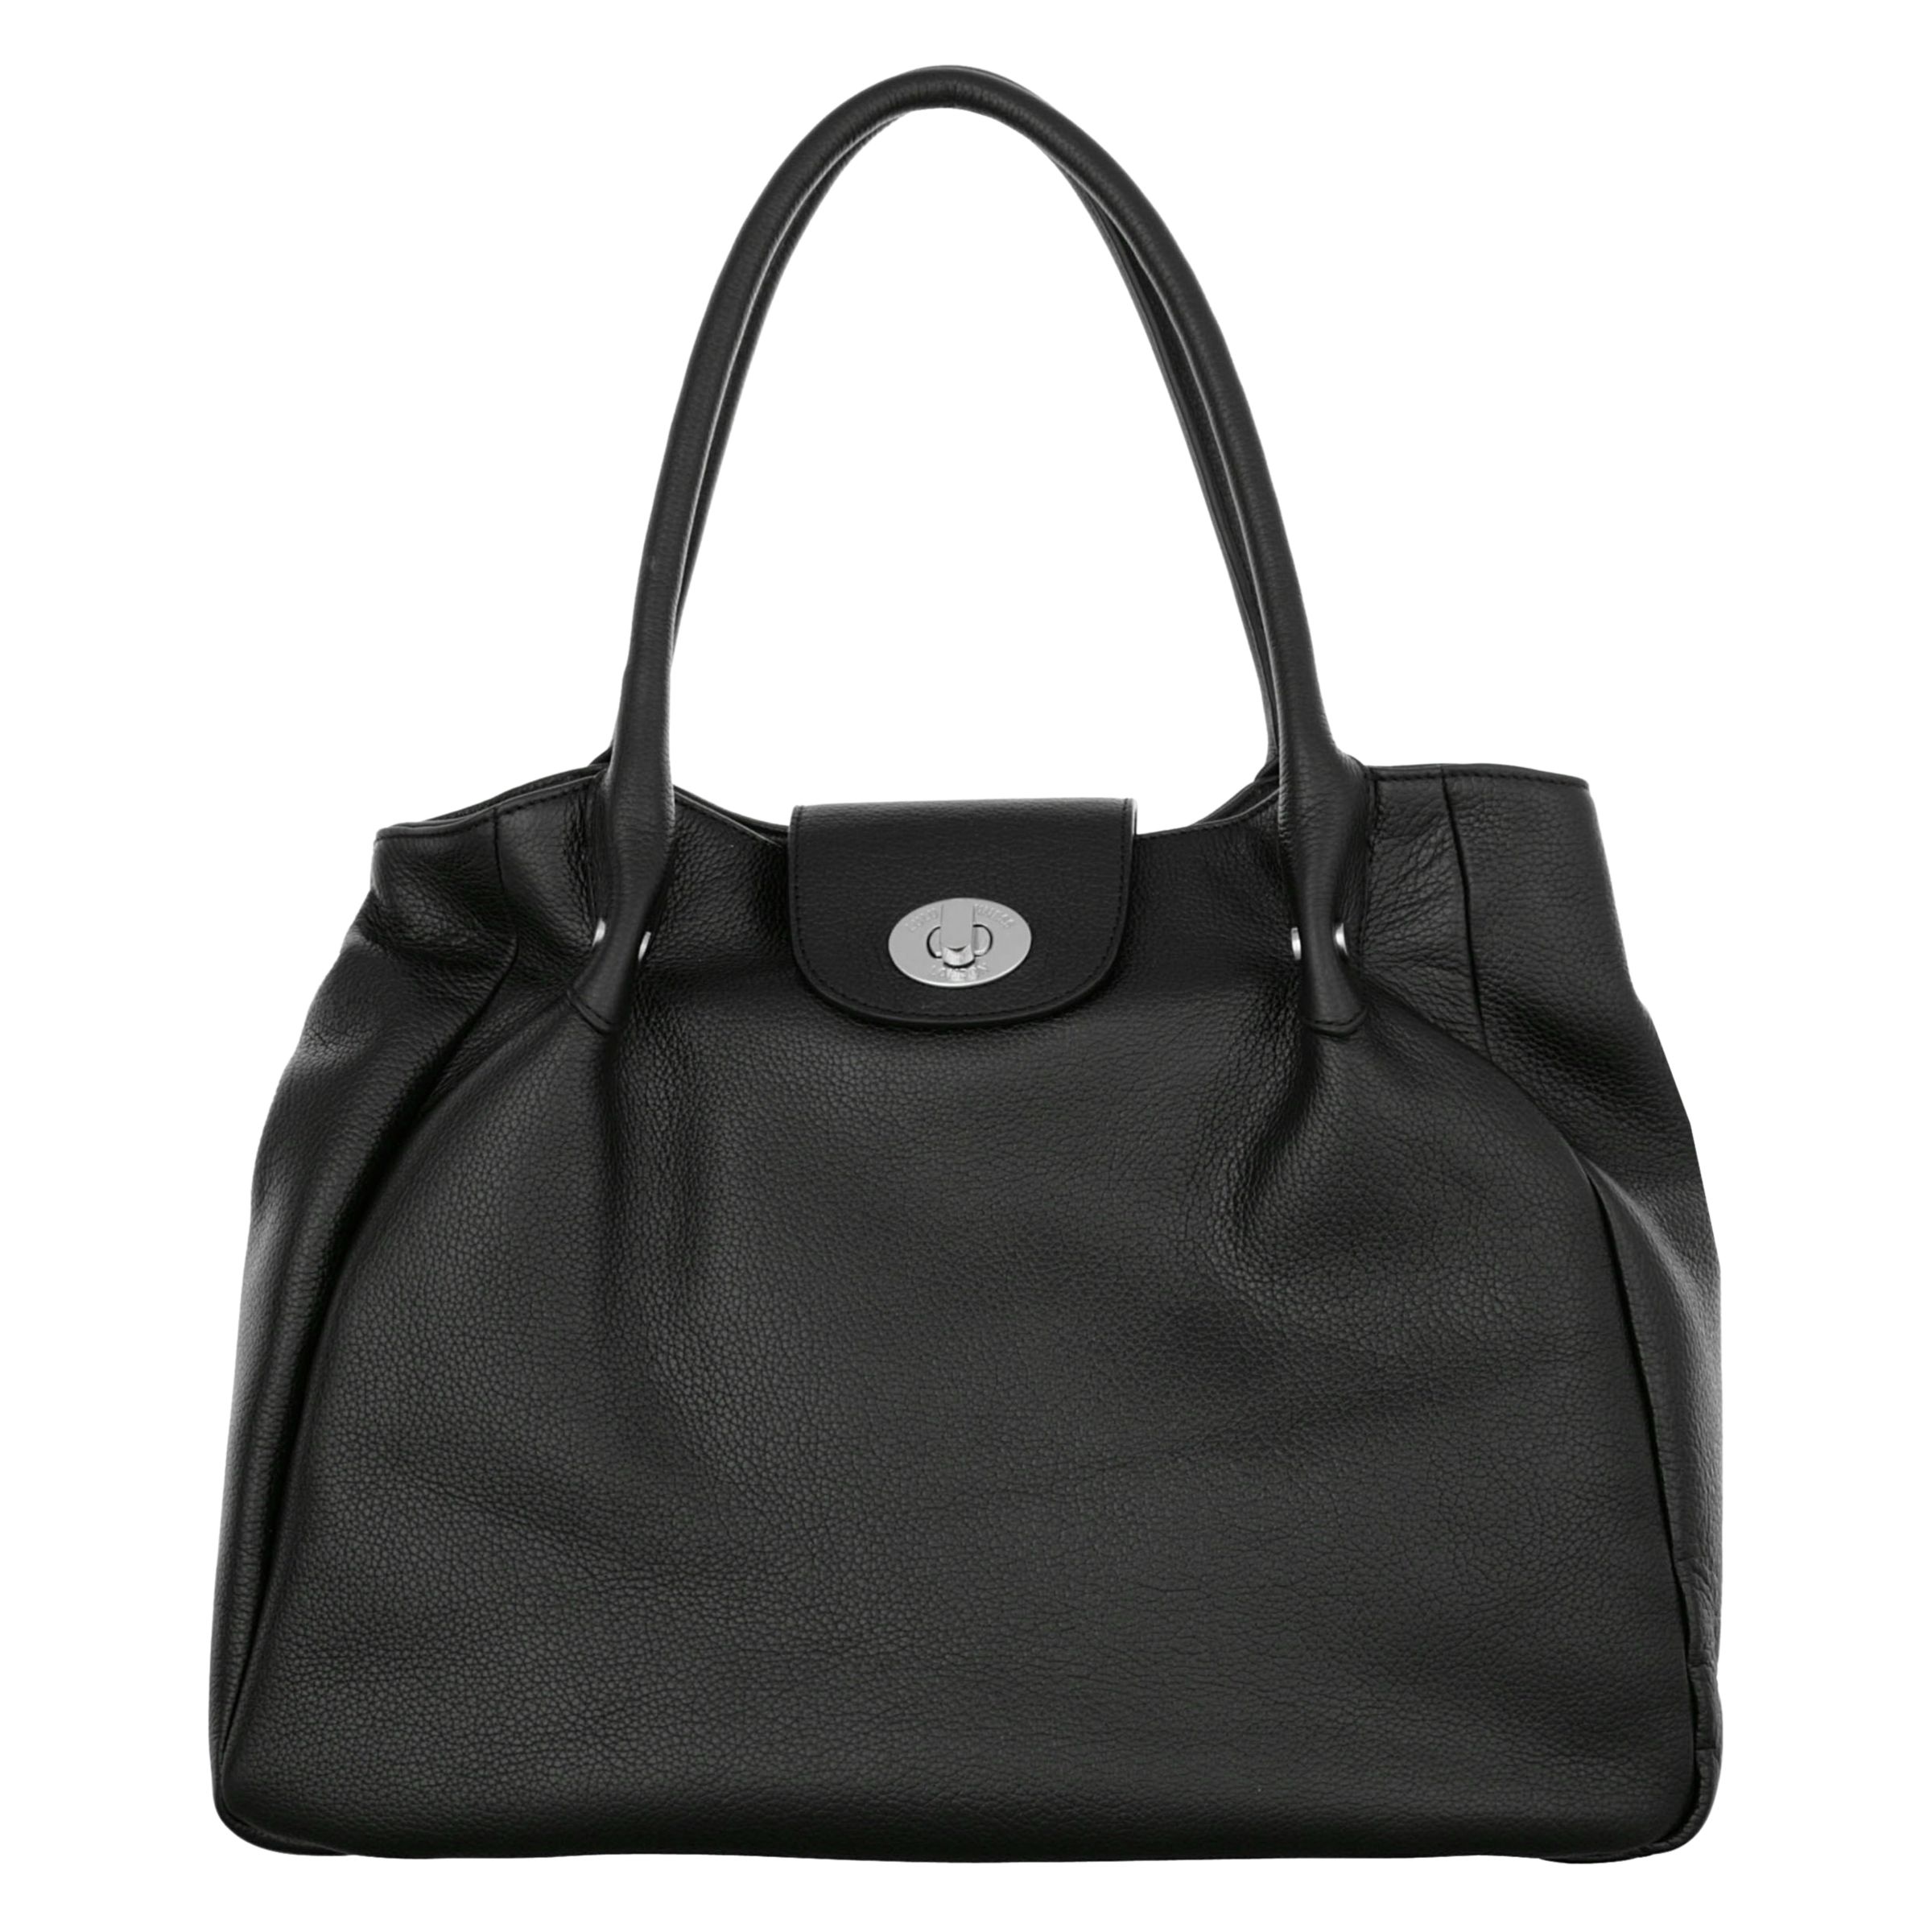 Lulu Guinness Romilly Leather Handbag, Black at John Lewis